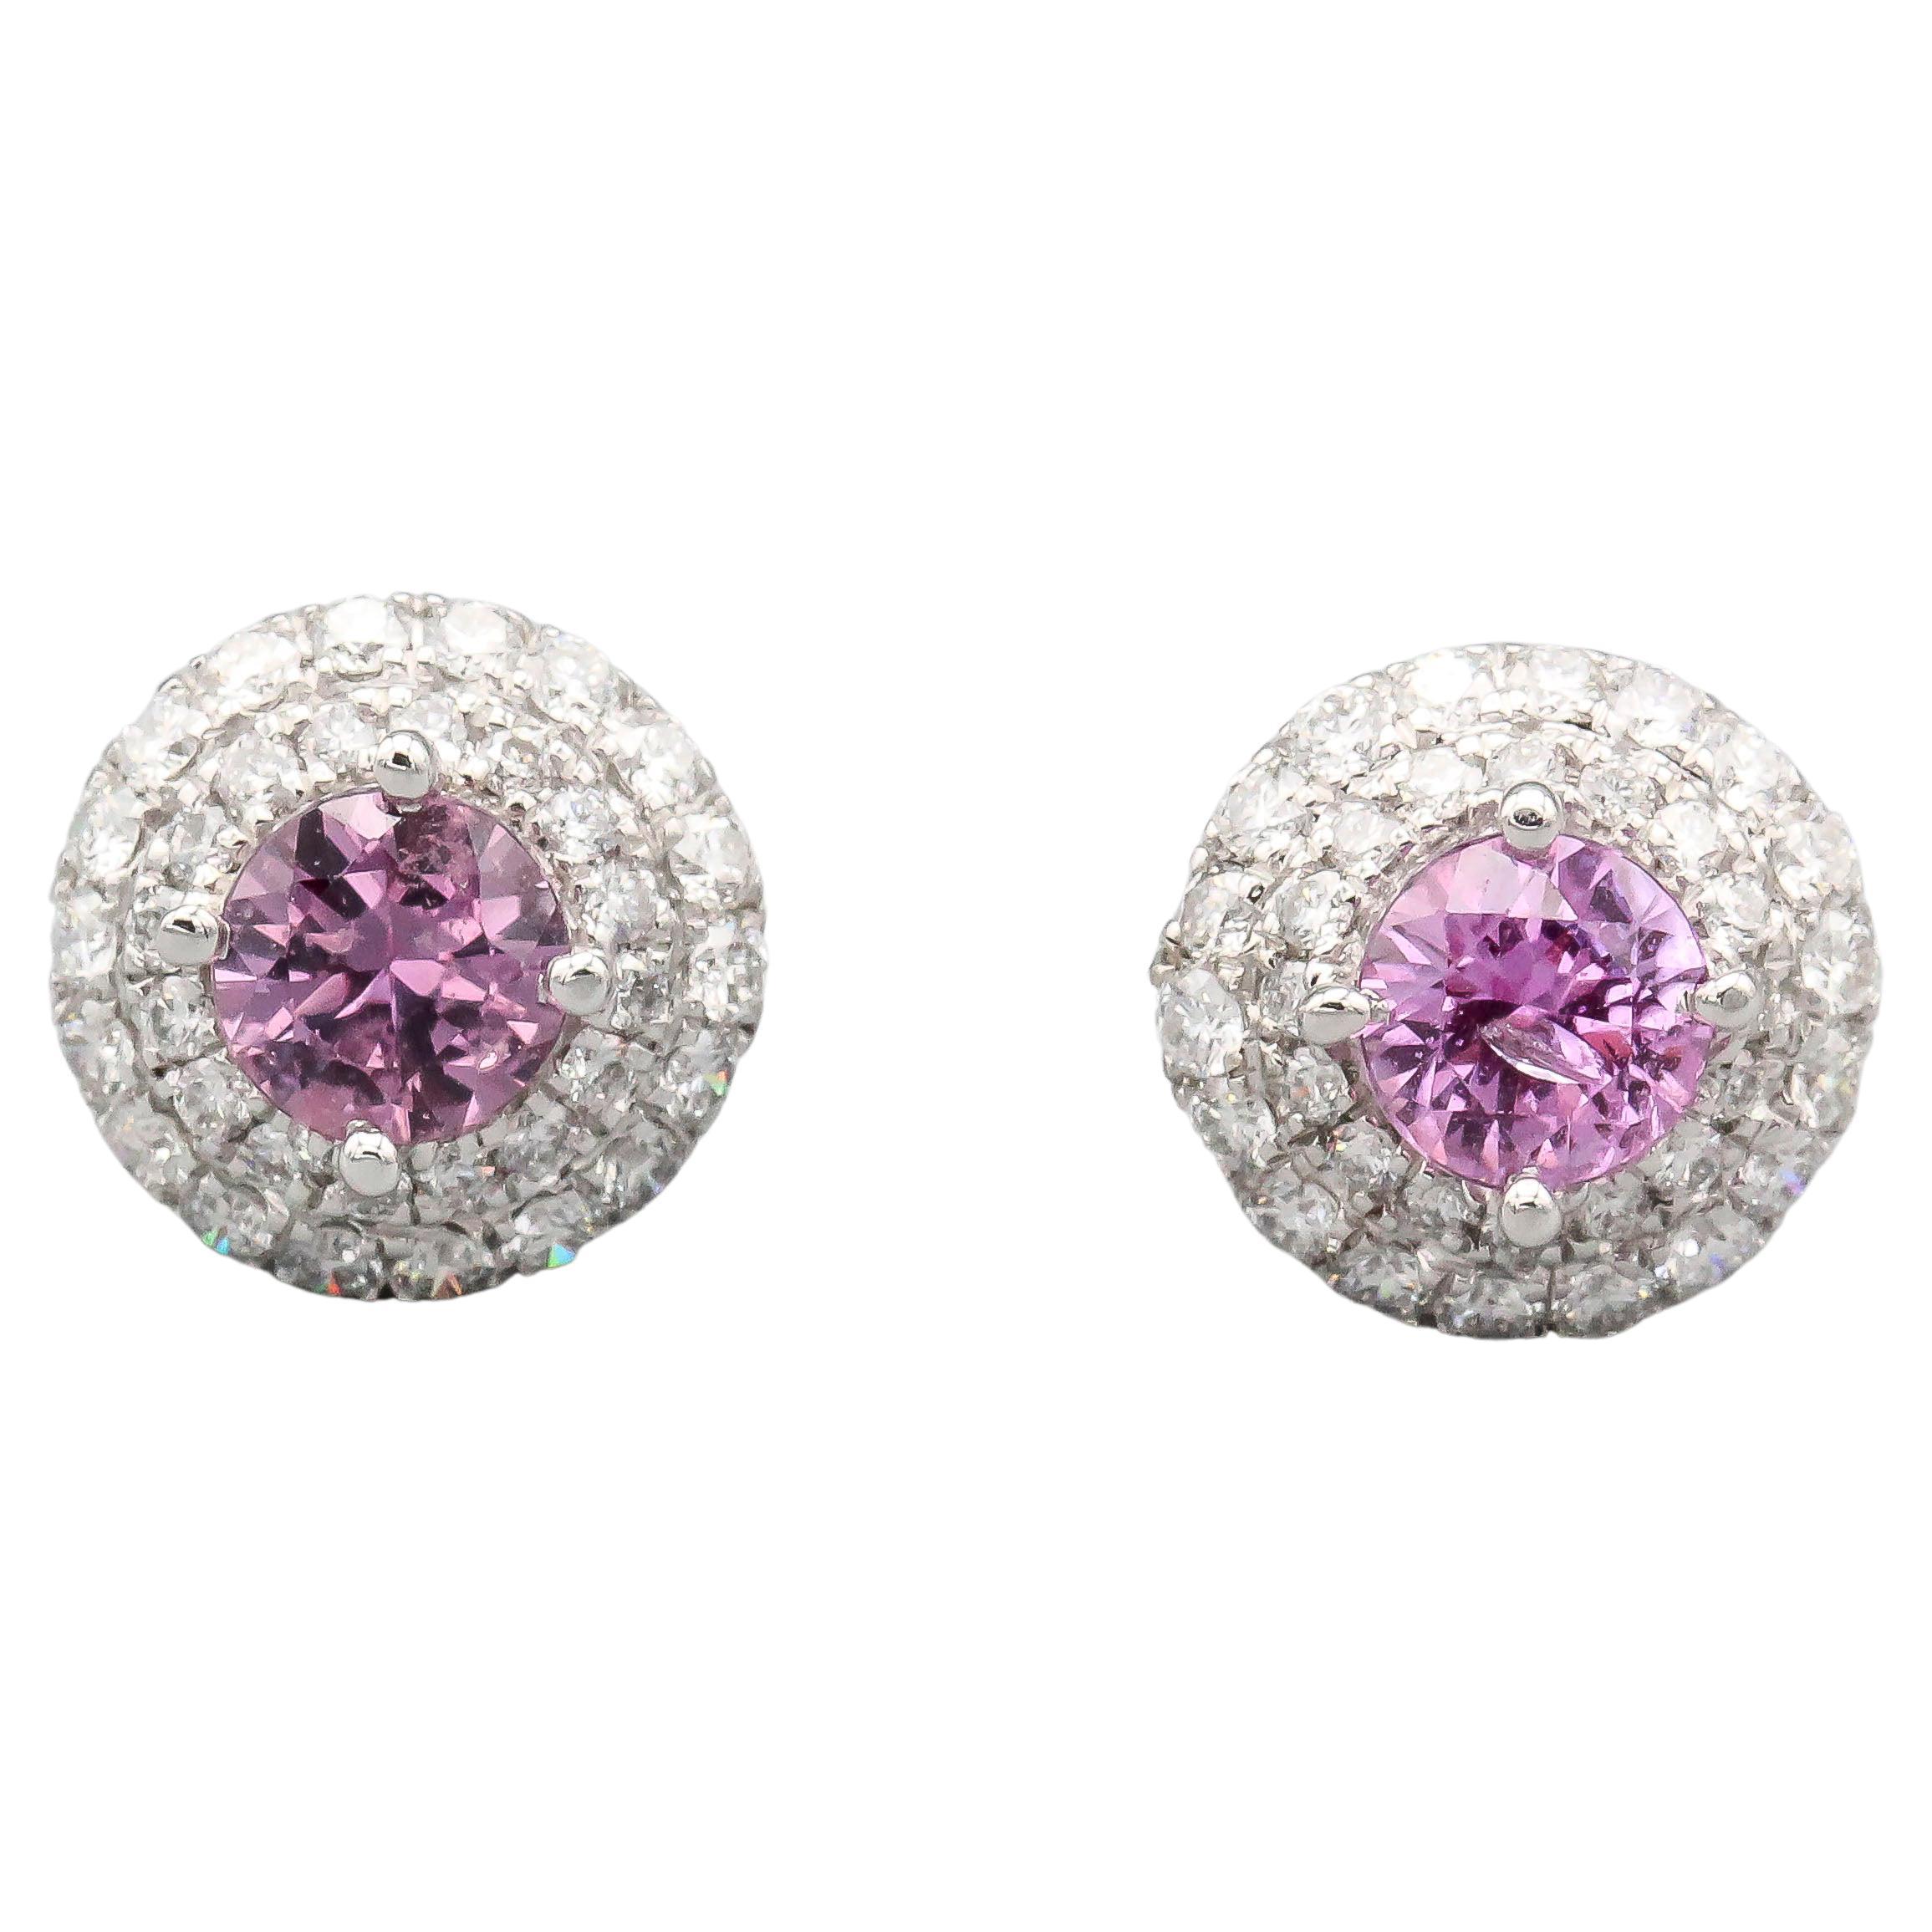 Tresorra Pink Sapphire Diamond 18 Karat White Gold Earrings Studs